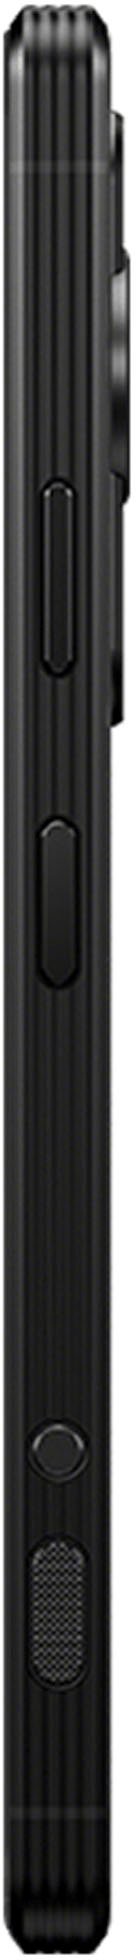 Sony - Xperia PRO-I 5G 512GB (Unlocked) - Black-Black